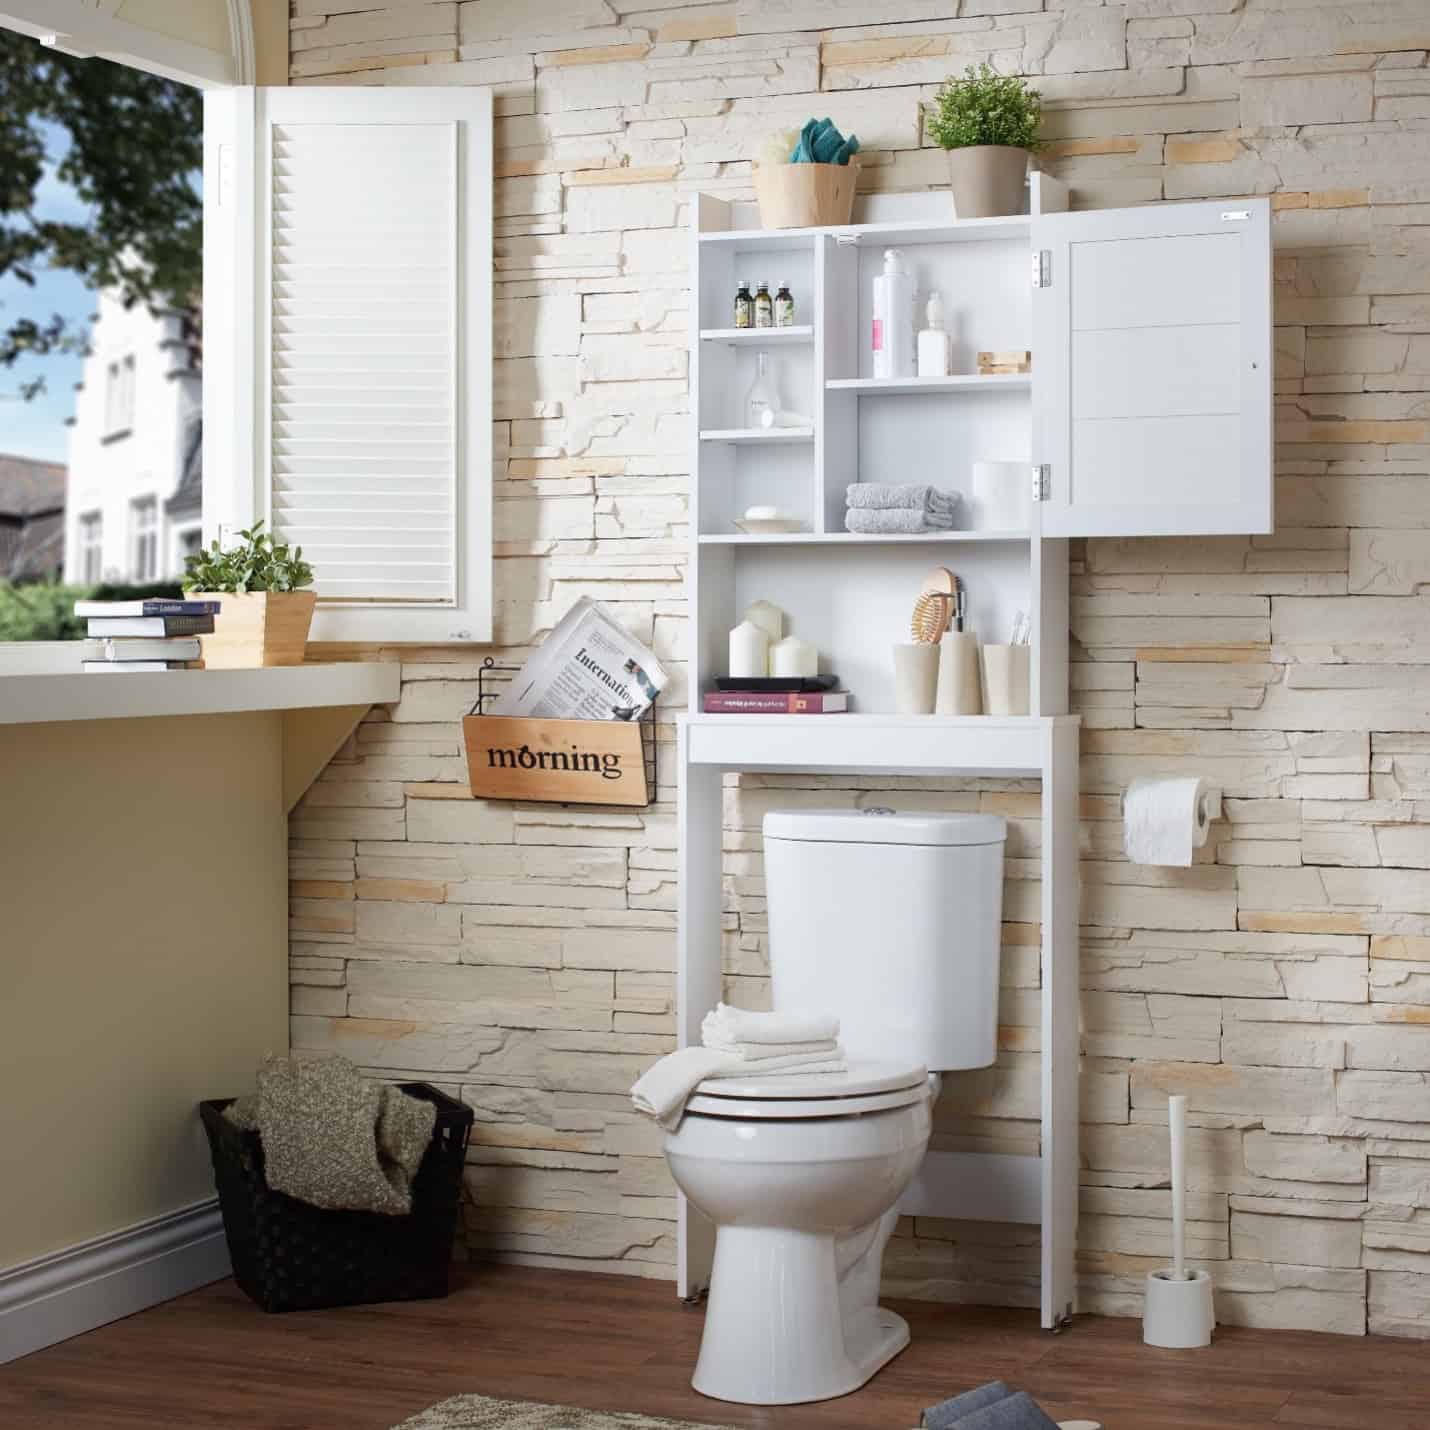 20 Creative Over the Toilet Storage Ideas